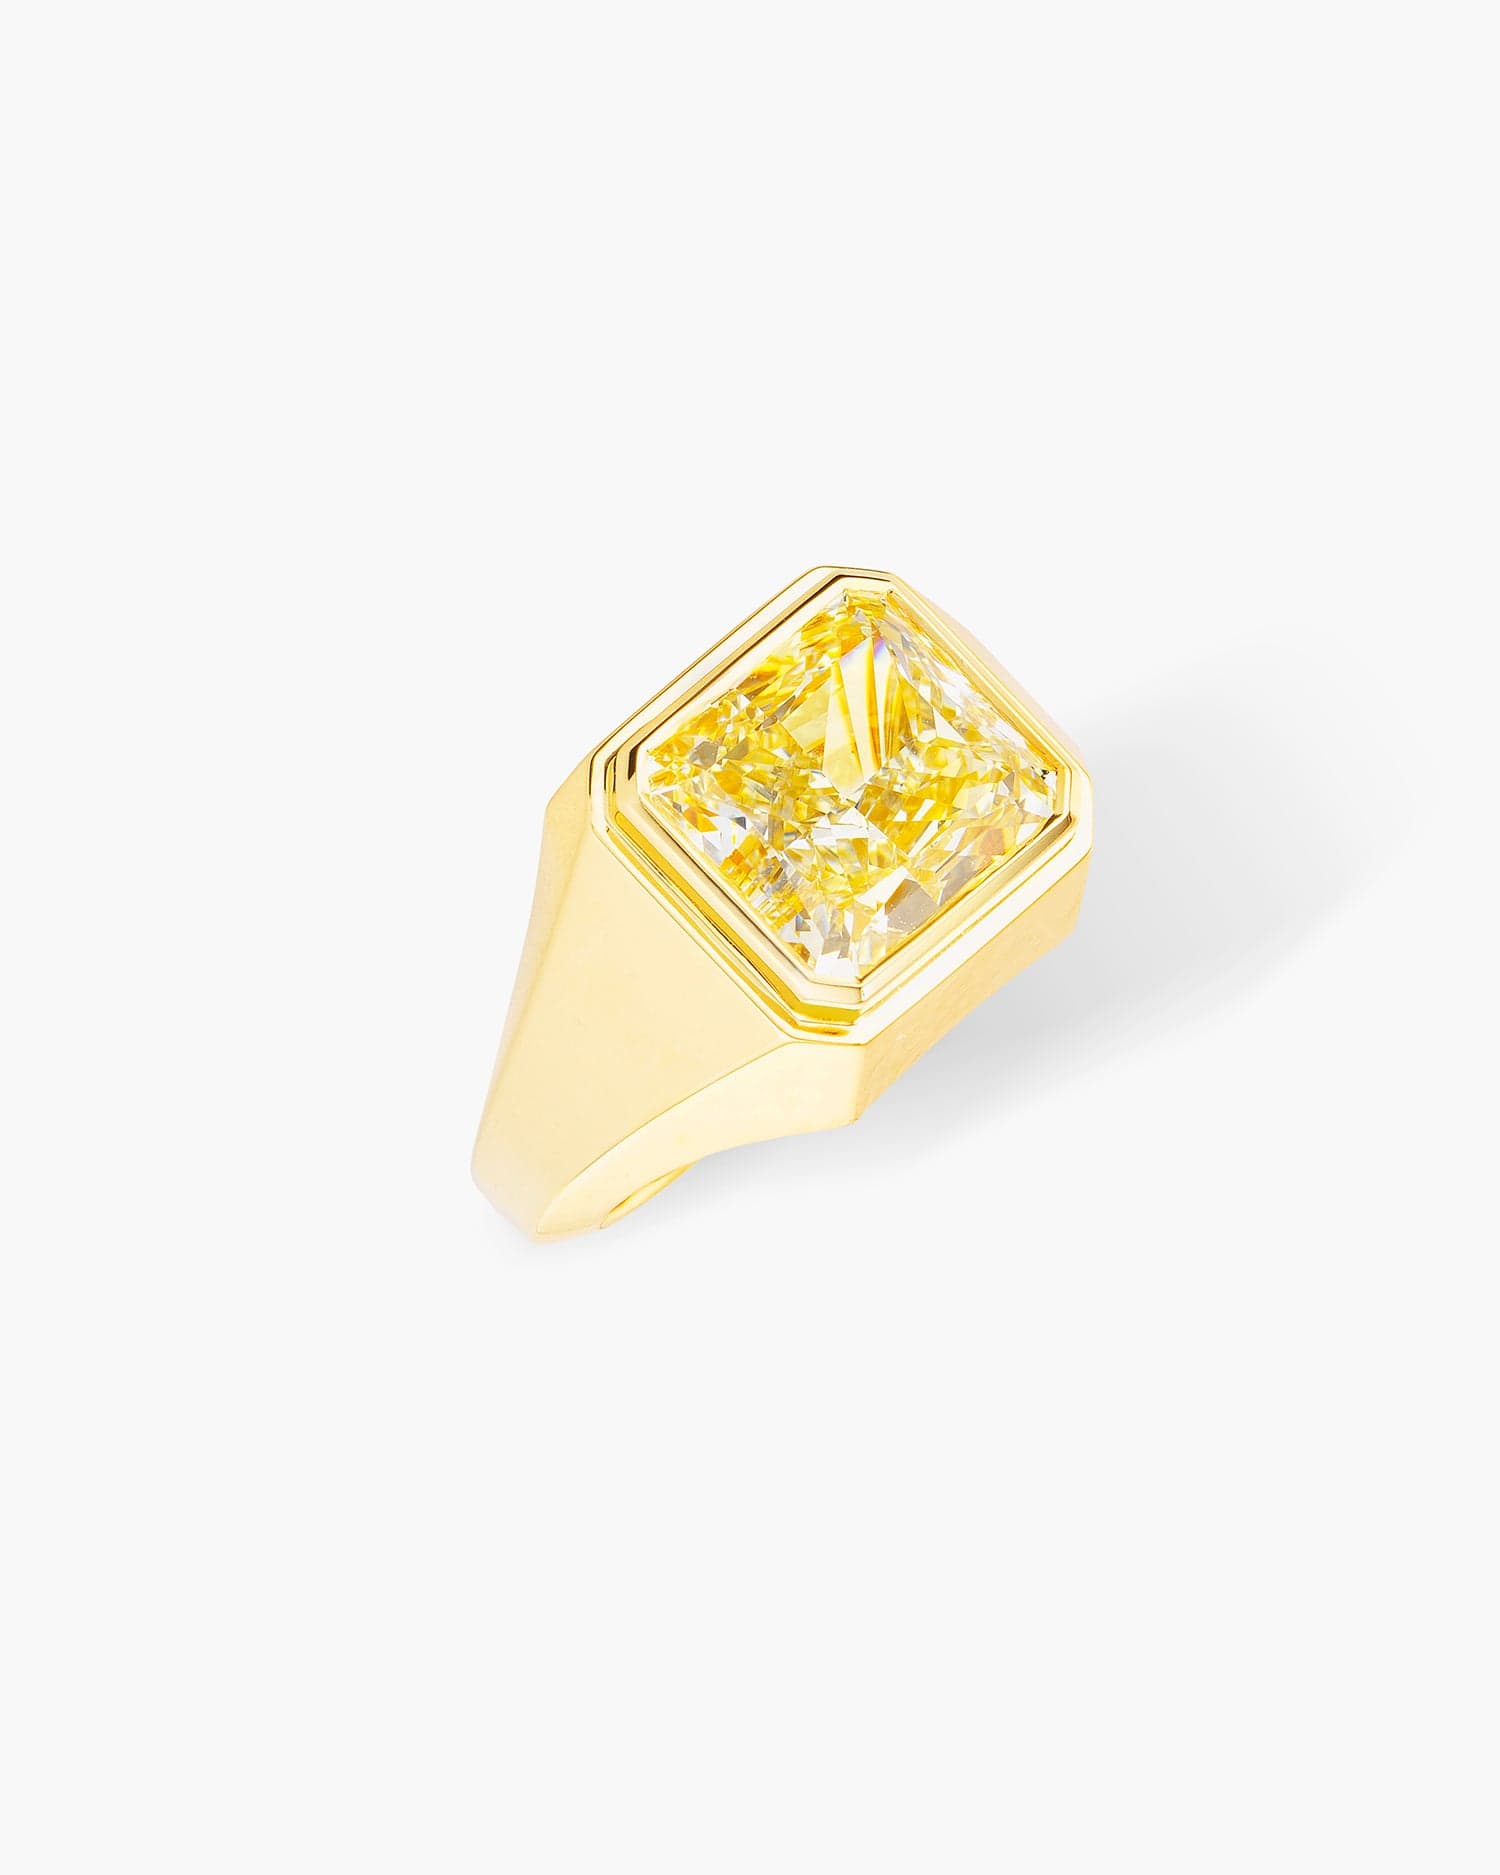 Yellow Diamond Rings: A Guide to Yellow Diamonds - Kwiat